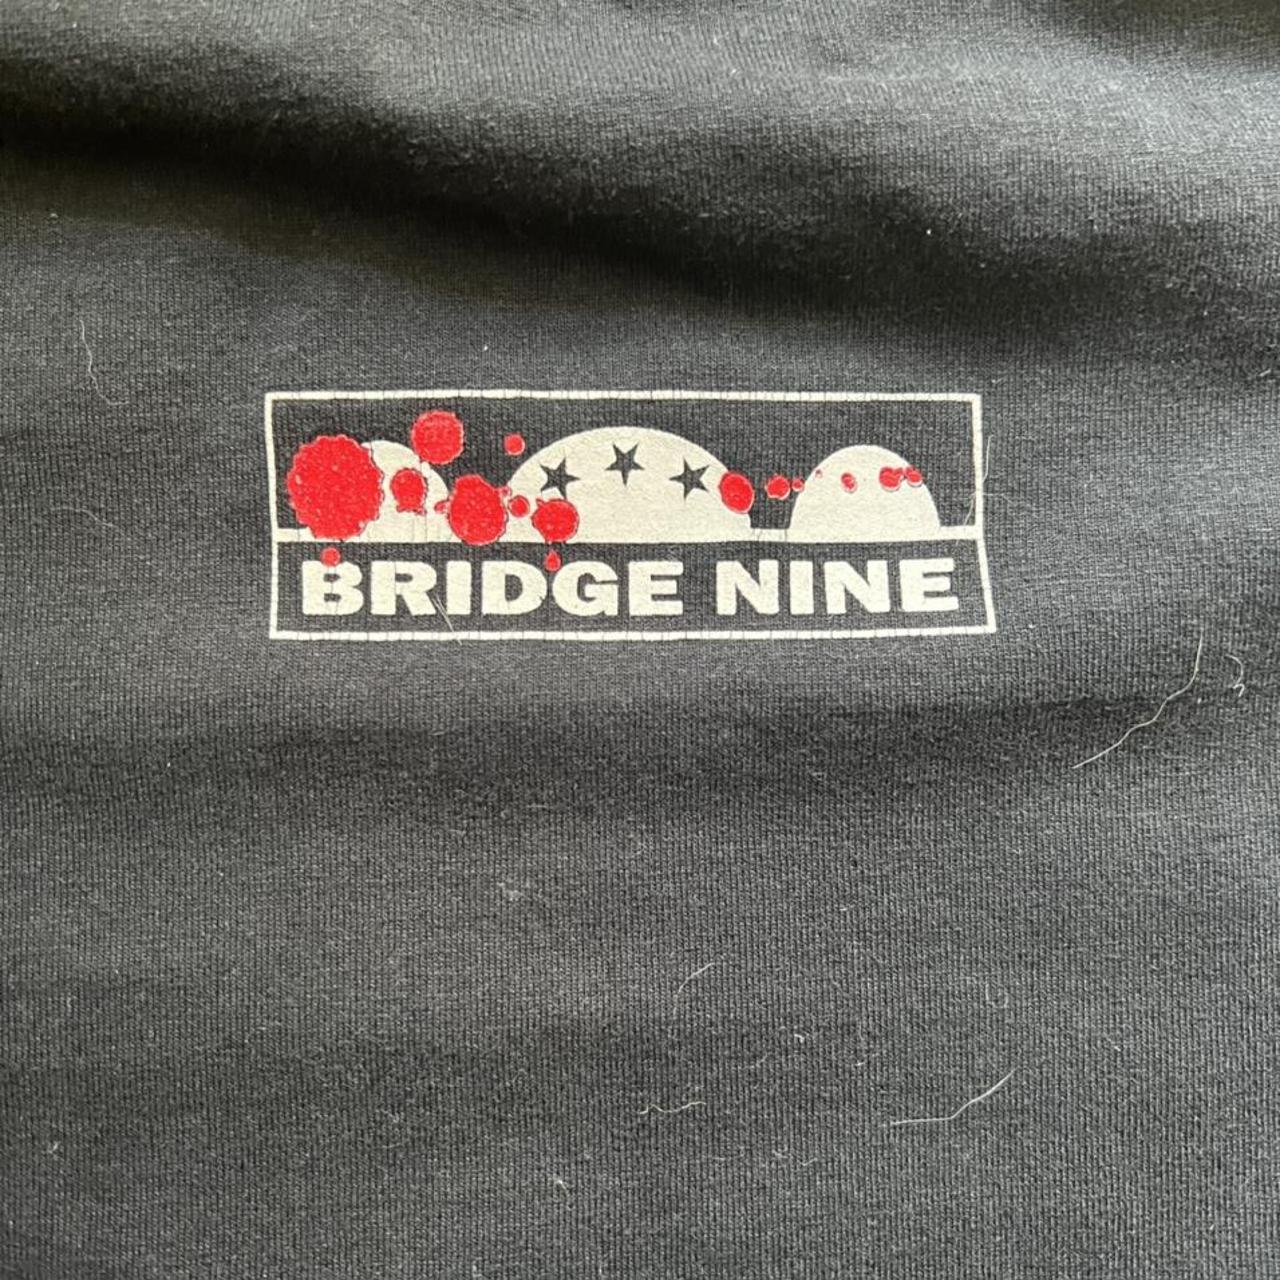 Product Image 3 - Champion bloody tee shirt. Bridge